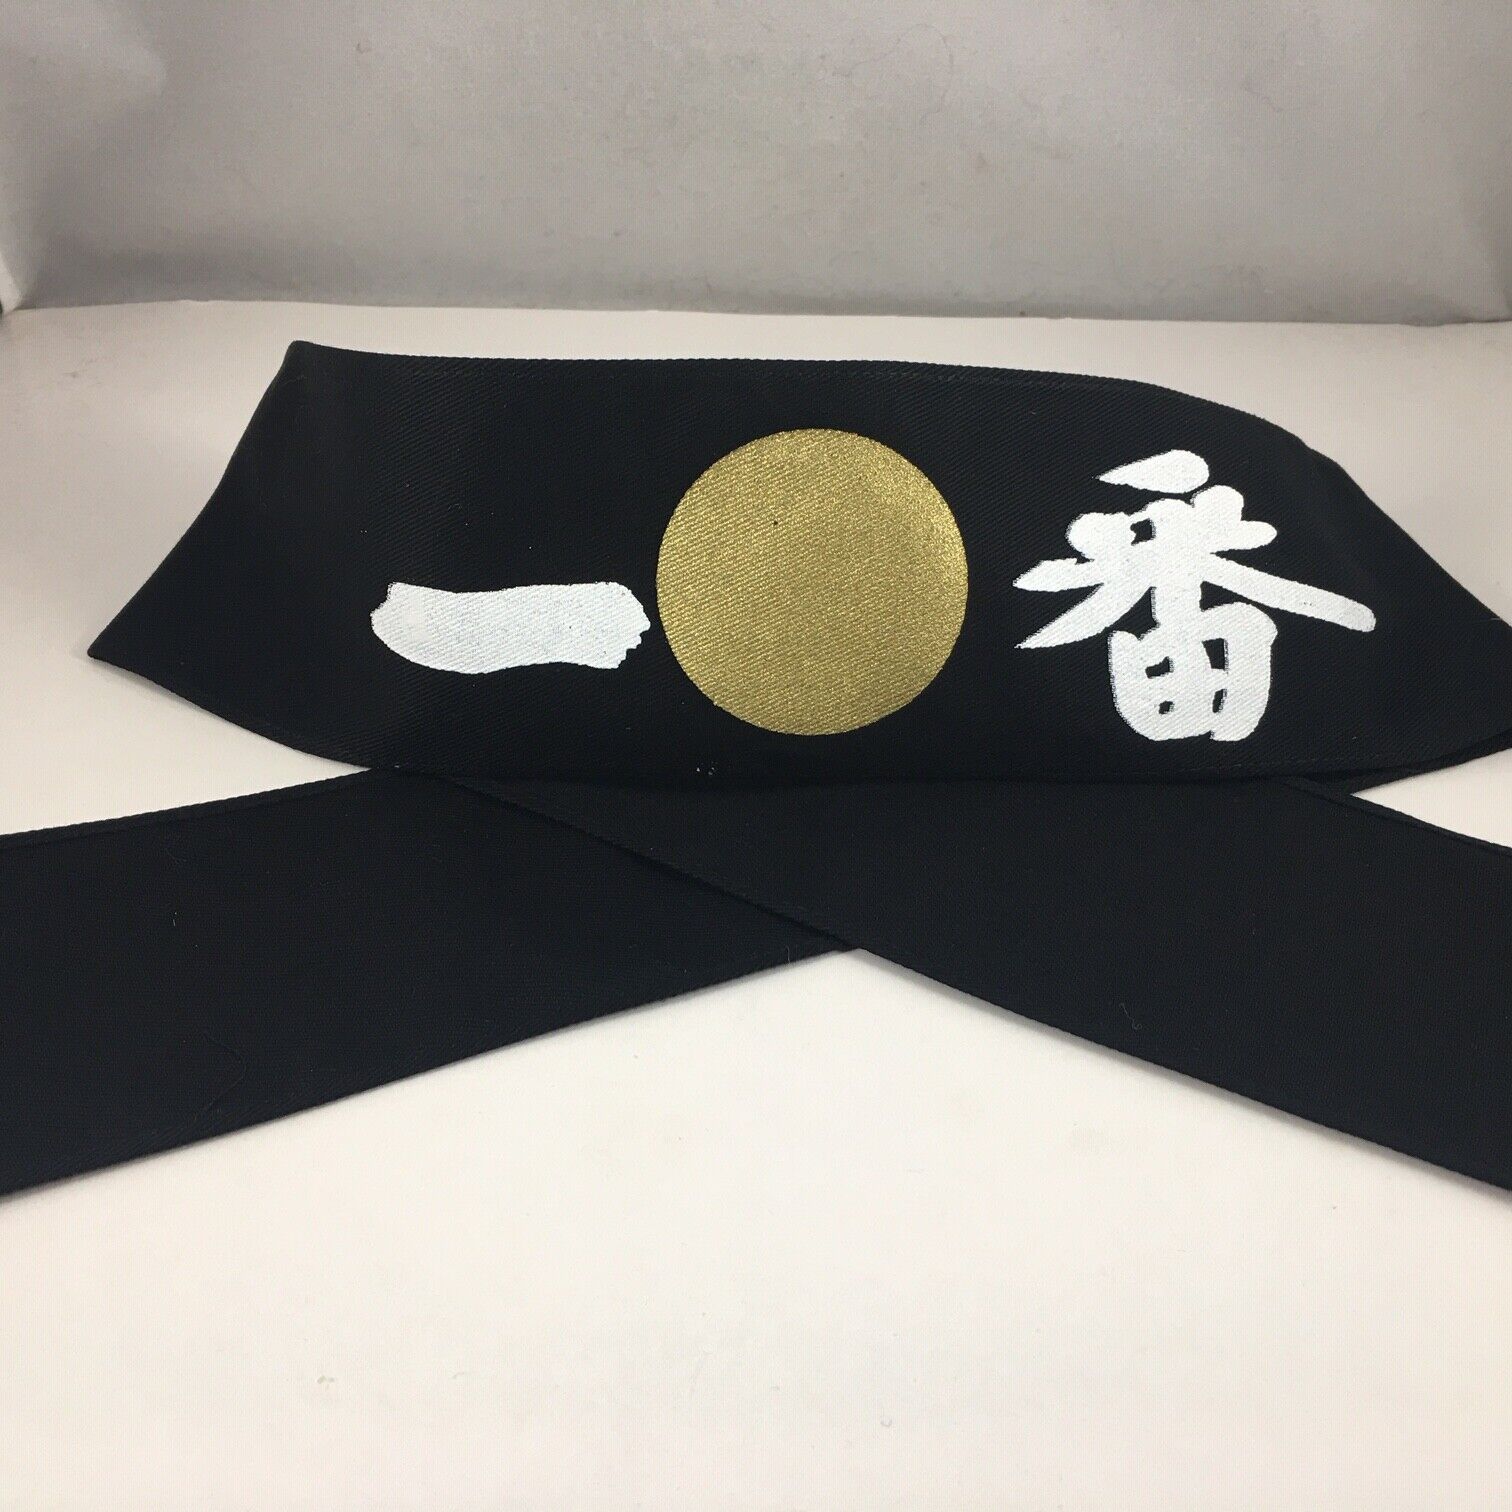 Japanese Hachimaki Headband Martial Arts Sports ICHIBAN Number One Made in Japan